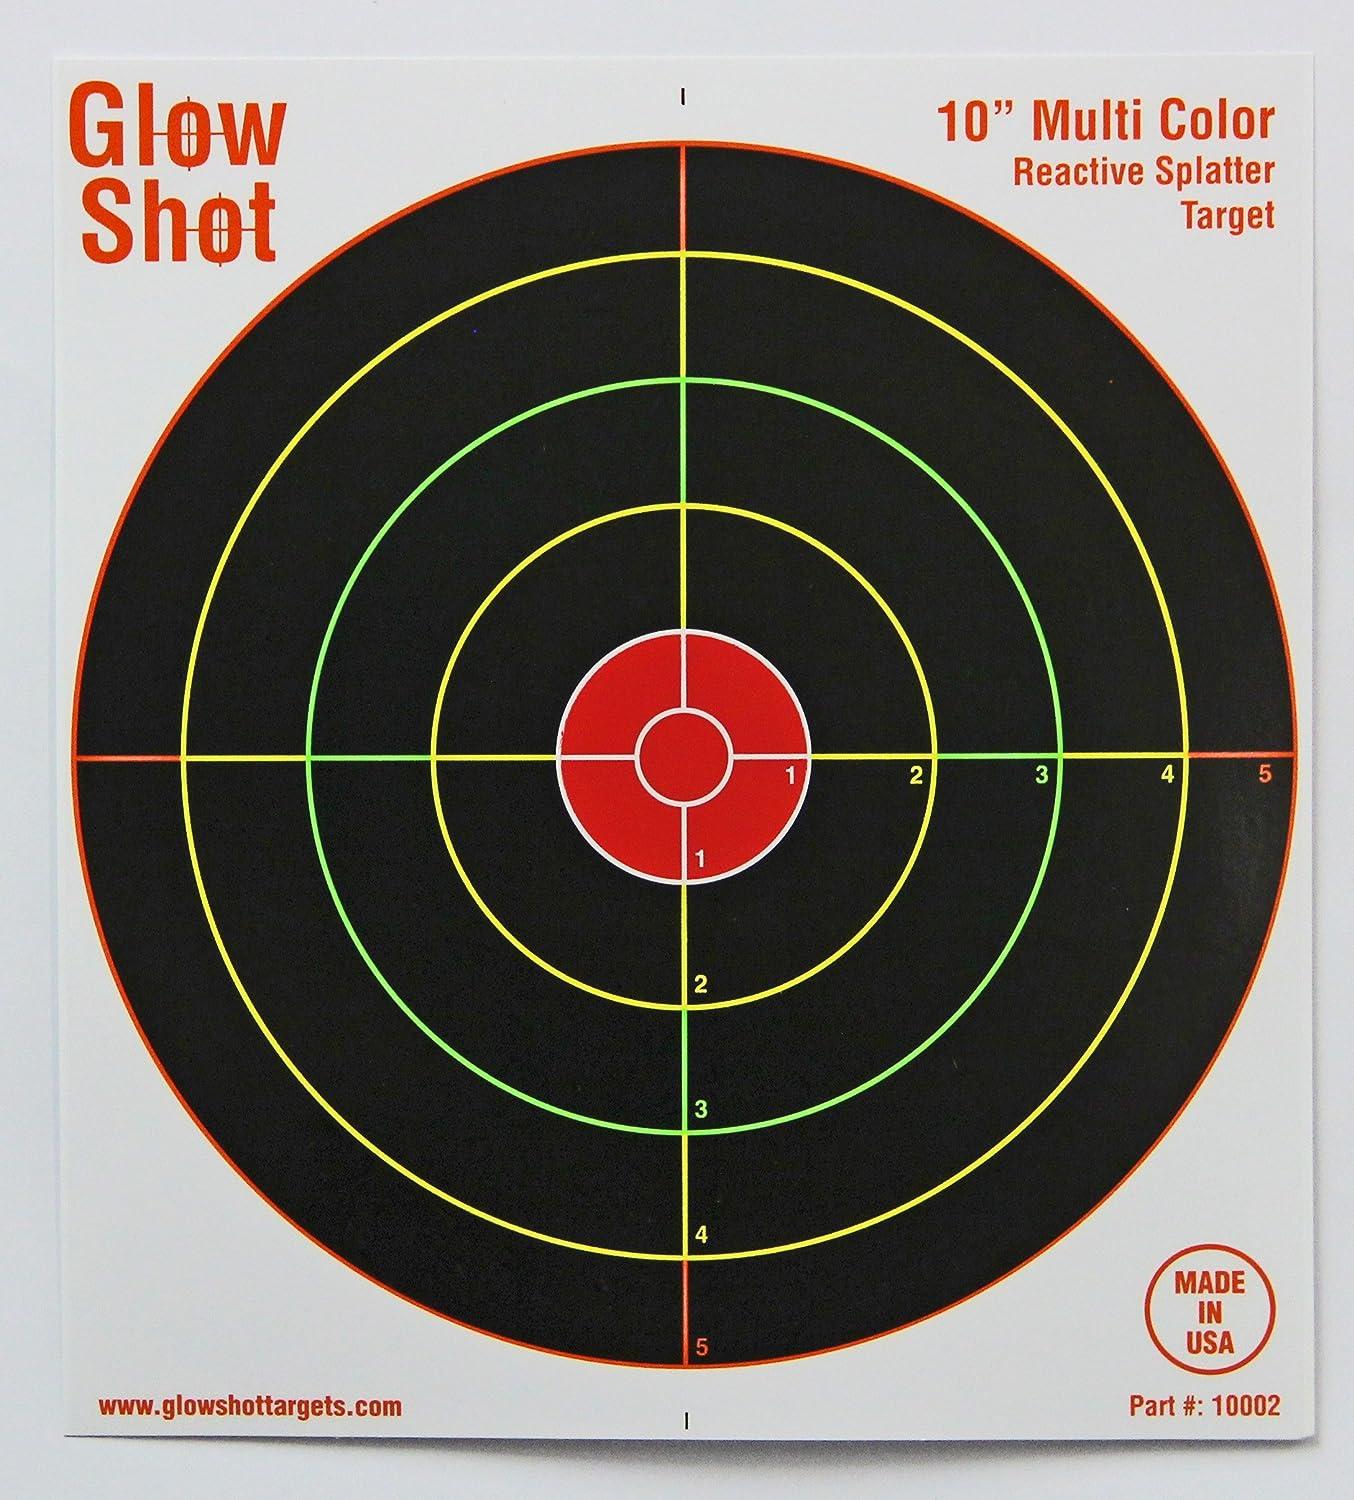 Home - GlowShot Targets